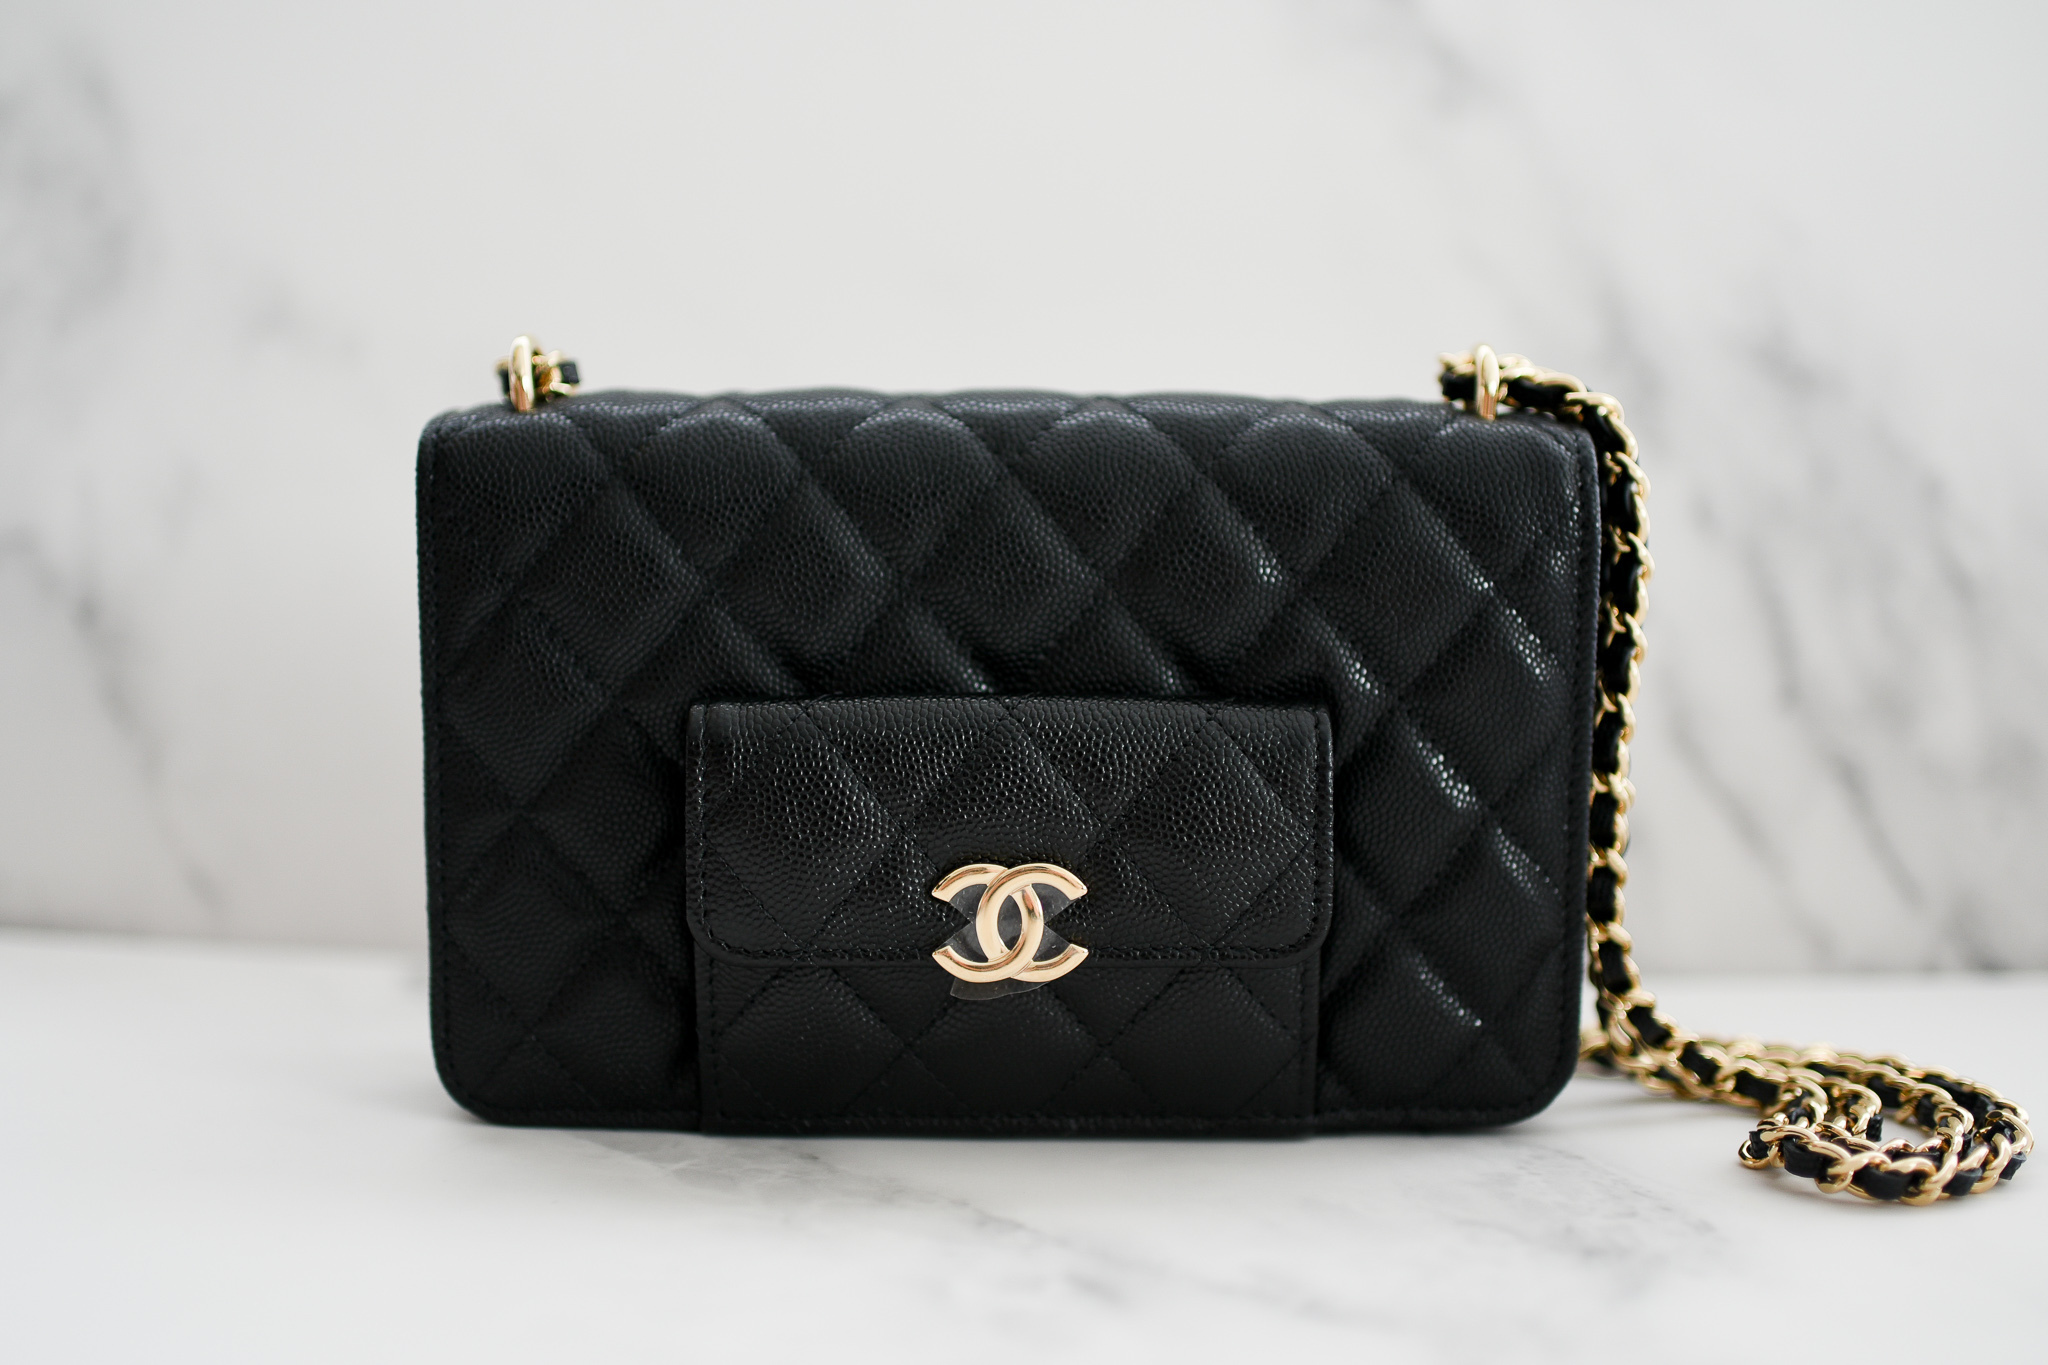 Chanel Bordeaux Burgundy Caviar Leather Wallet on Chain Flap Bag WOC 862149